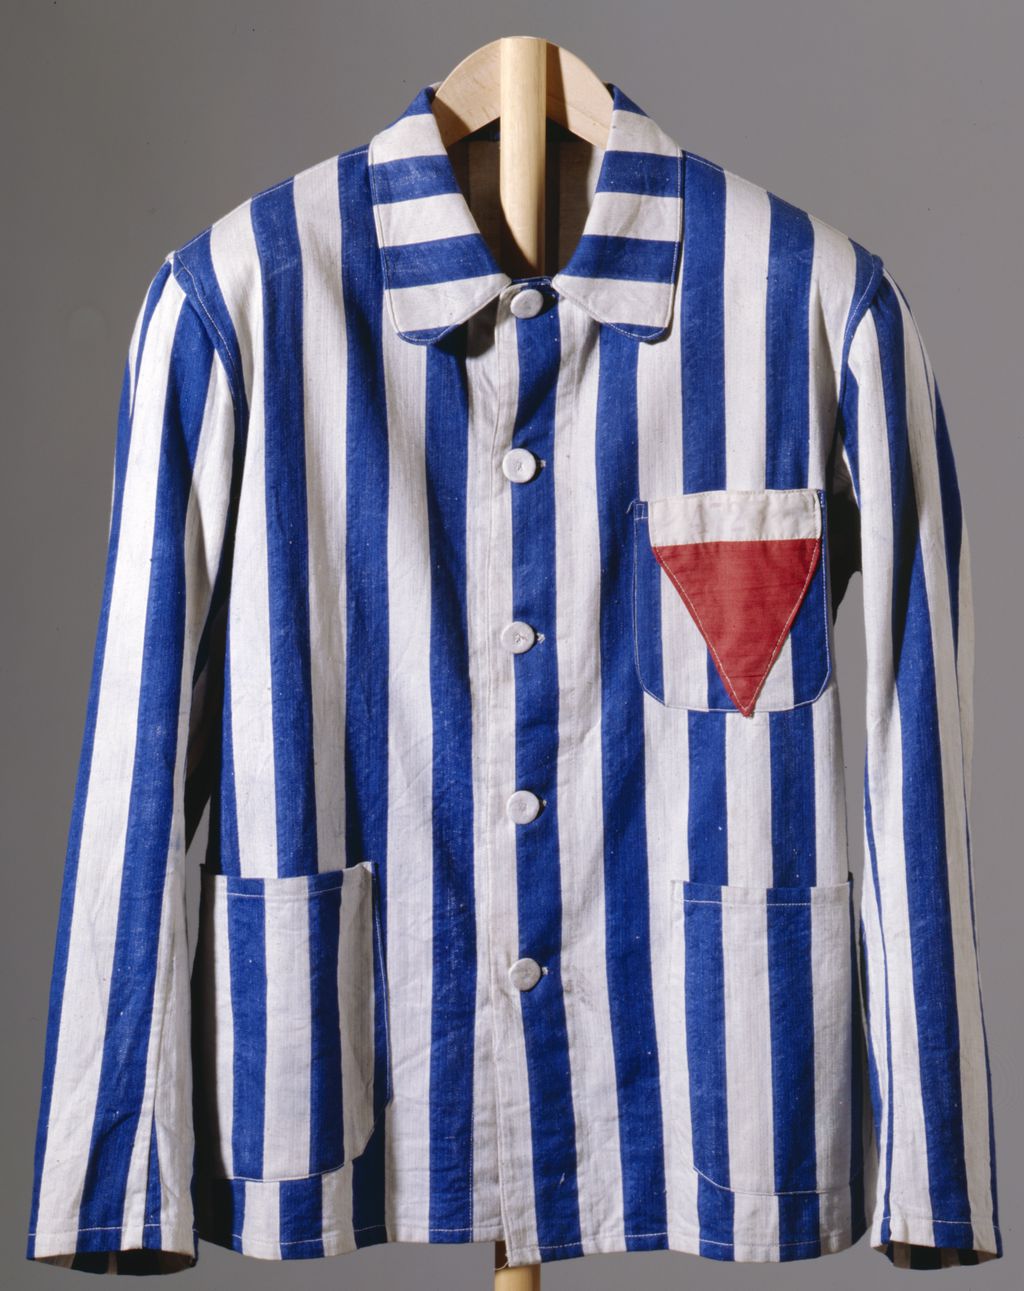 Exponat: Textil: Jacke eines KZ-Häftlings, 1938/1942